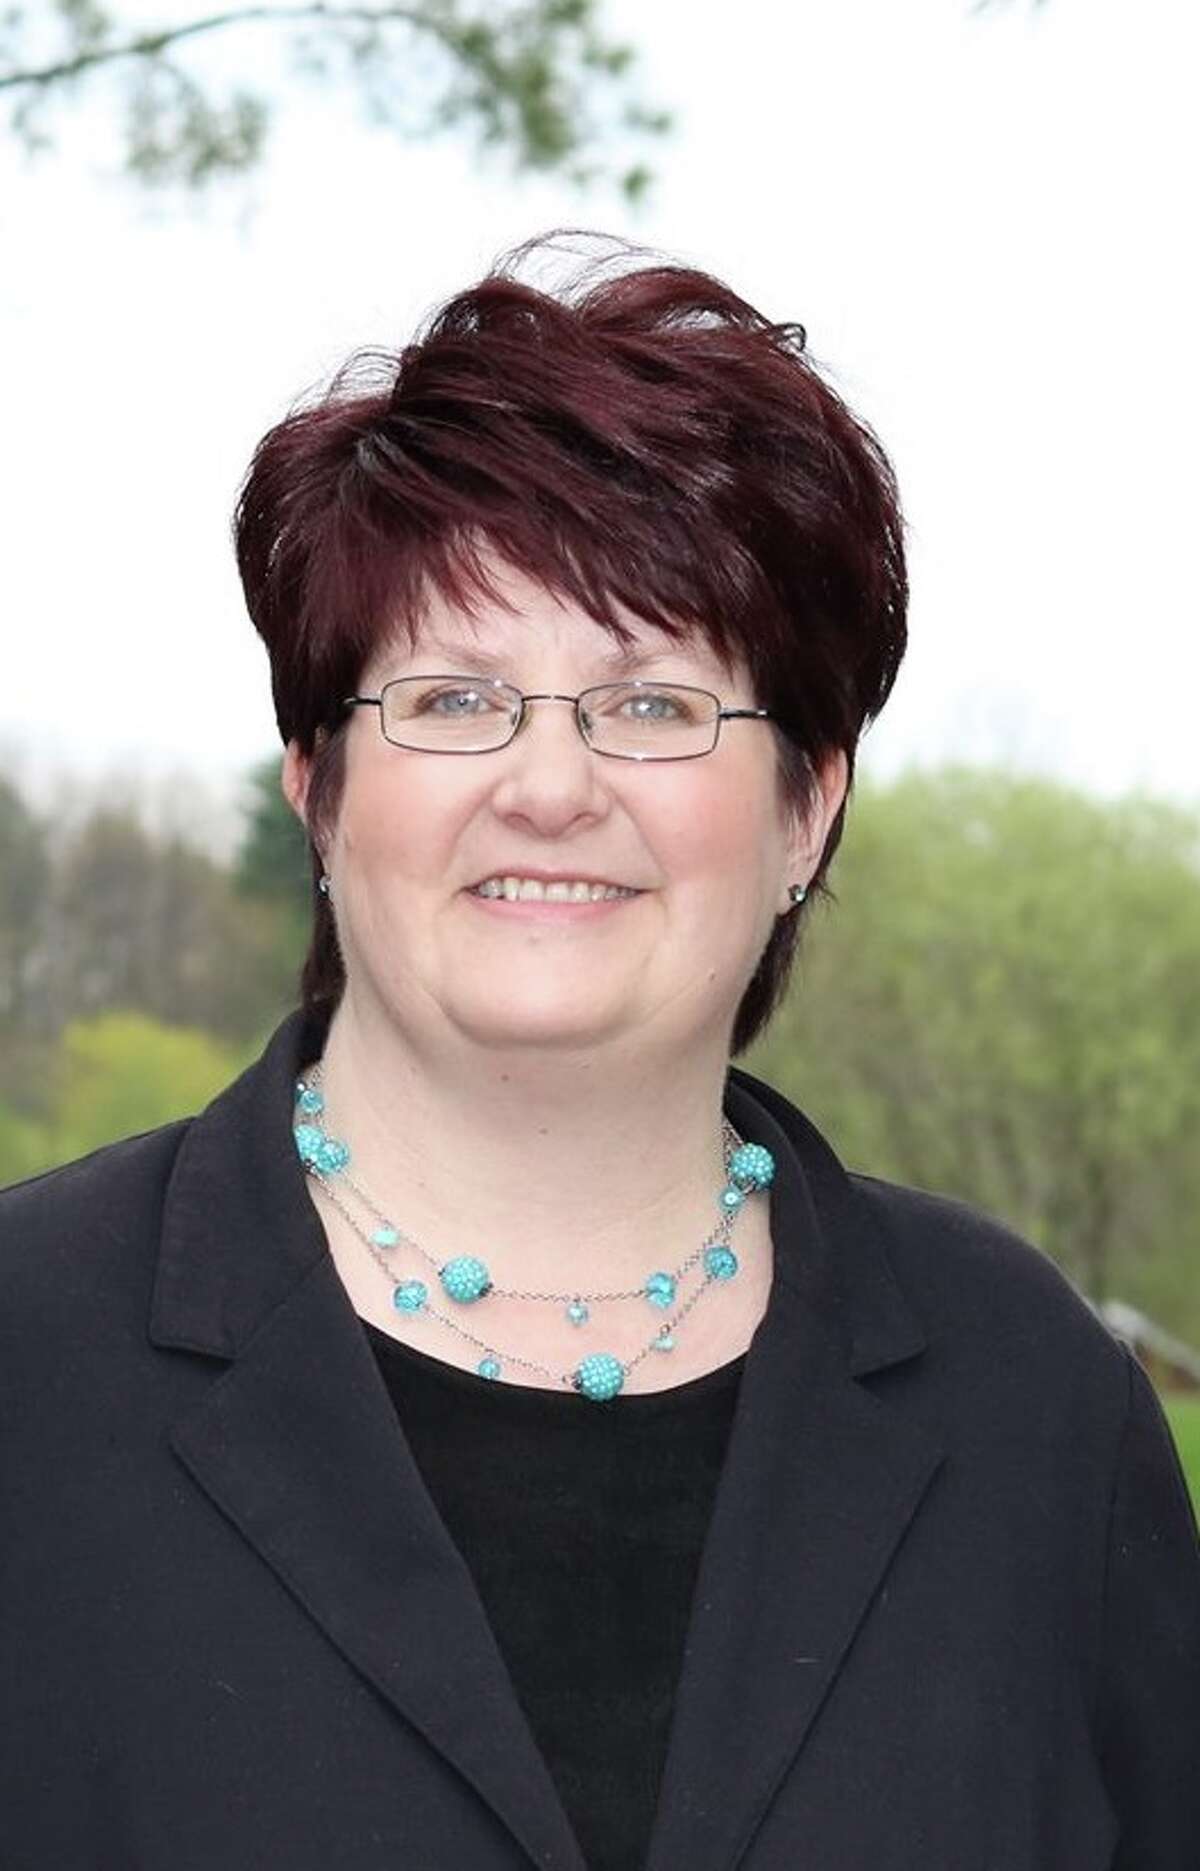 Loretta Rigney, Schenectady County legislature candidate ORG XMIT: b32z88lHsQeaGBXo2wEZ